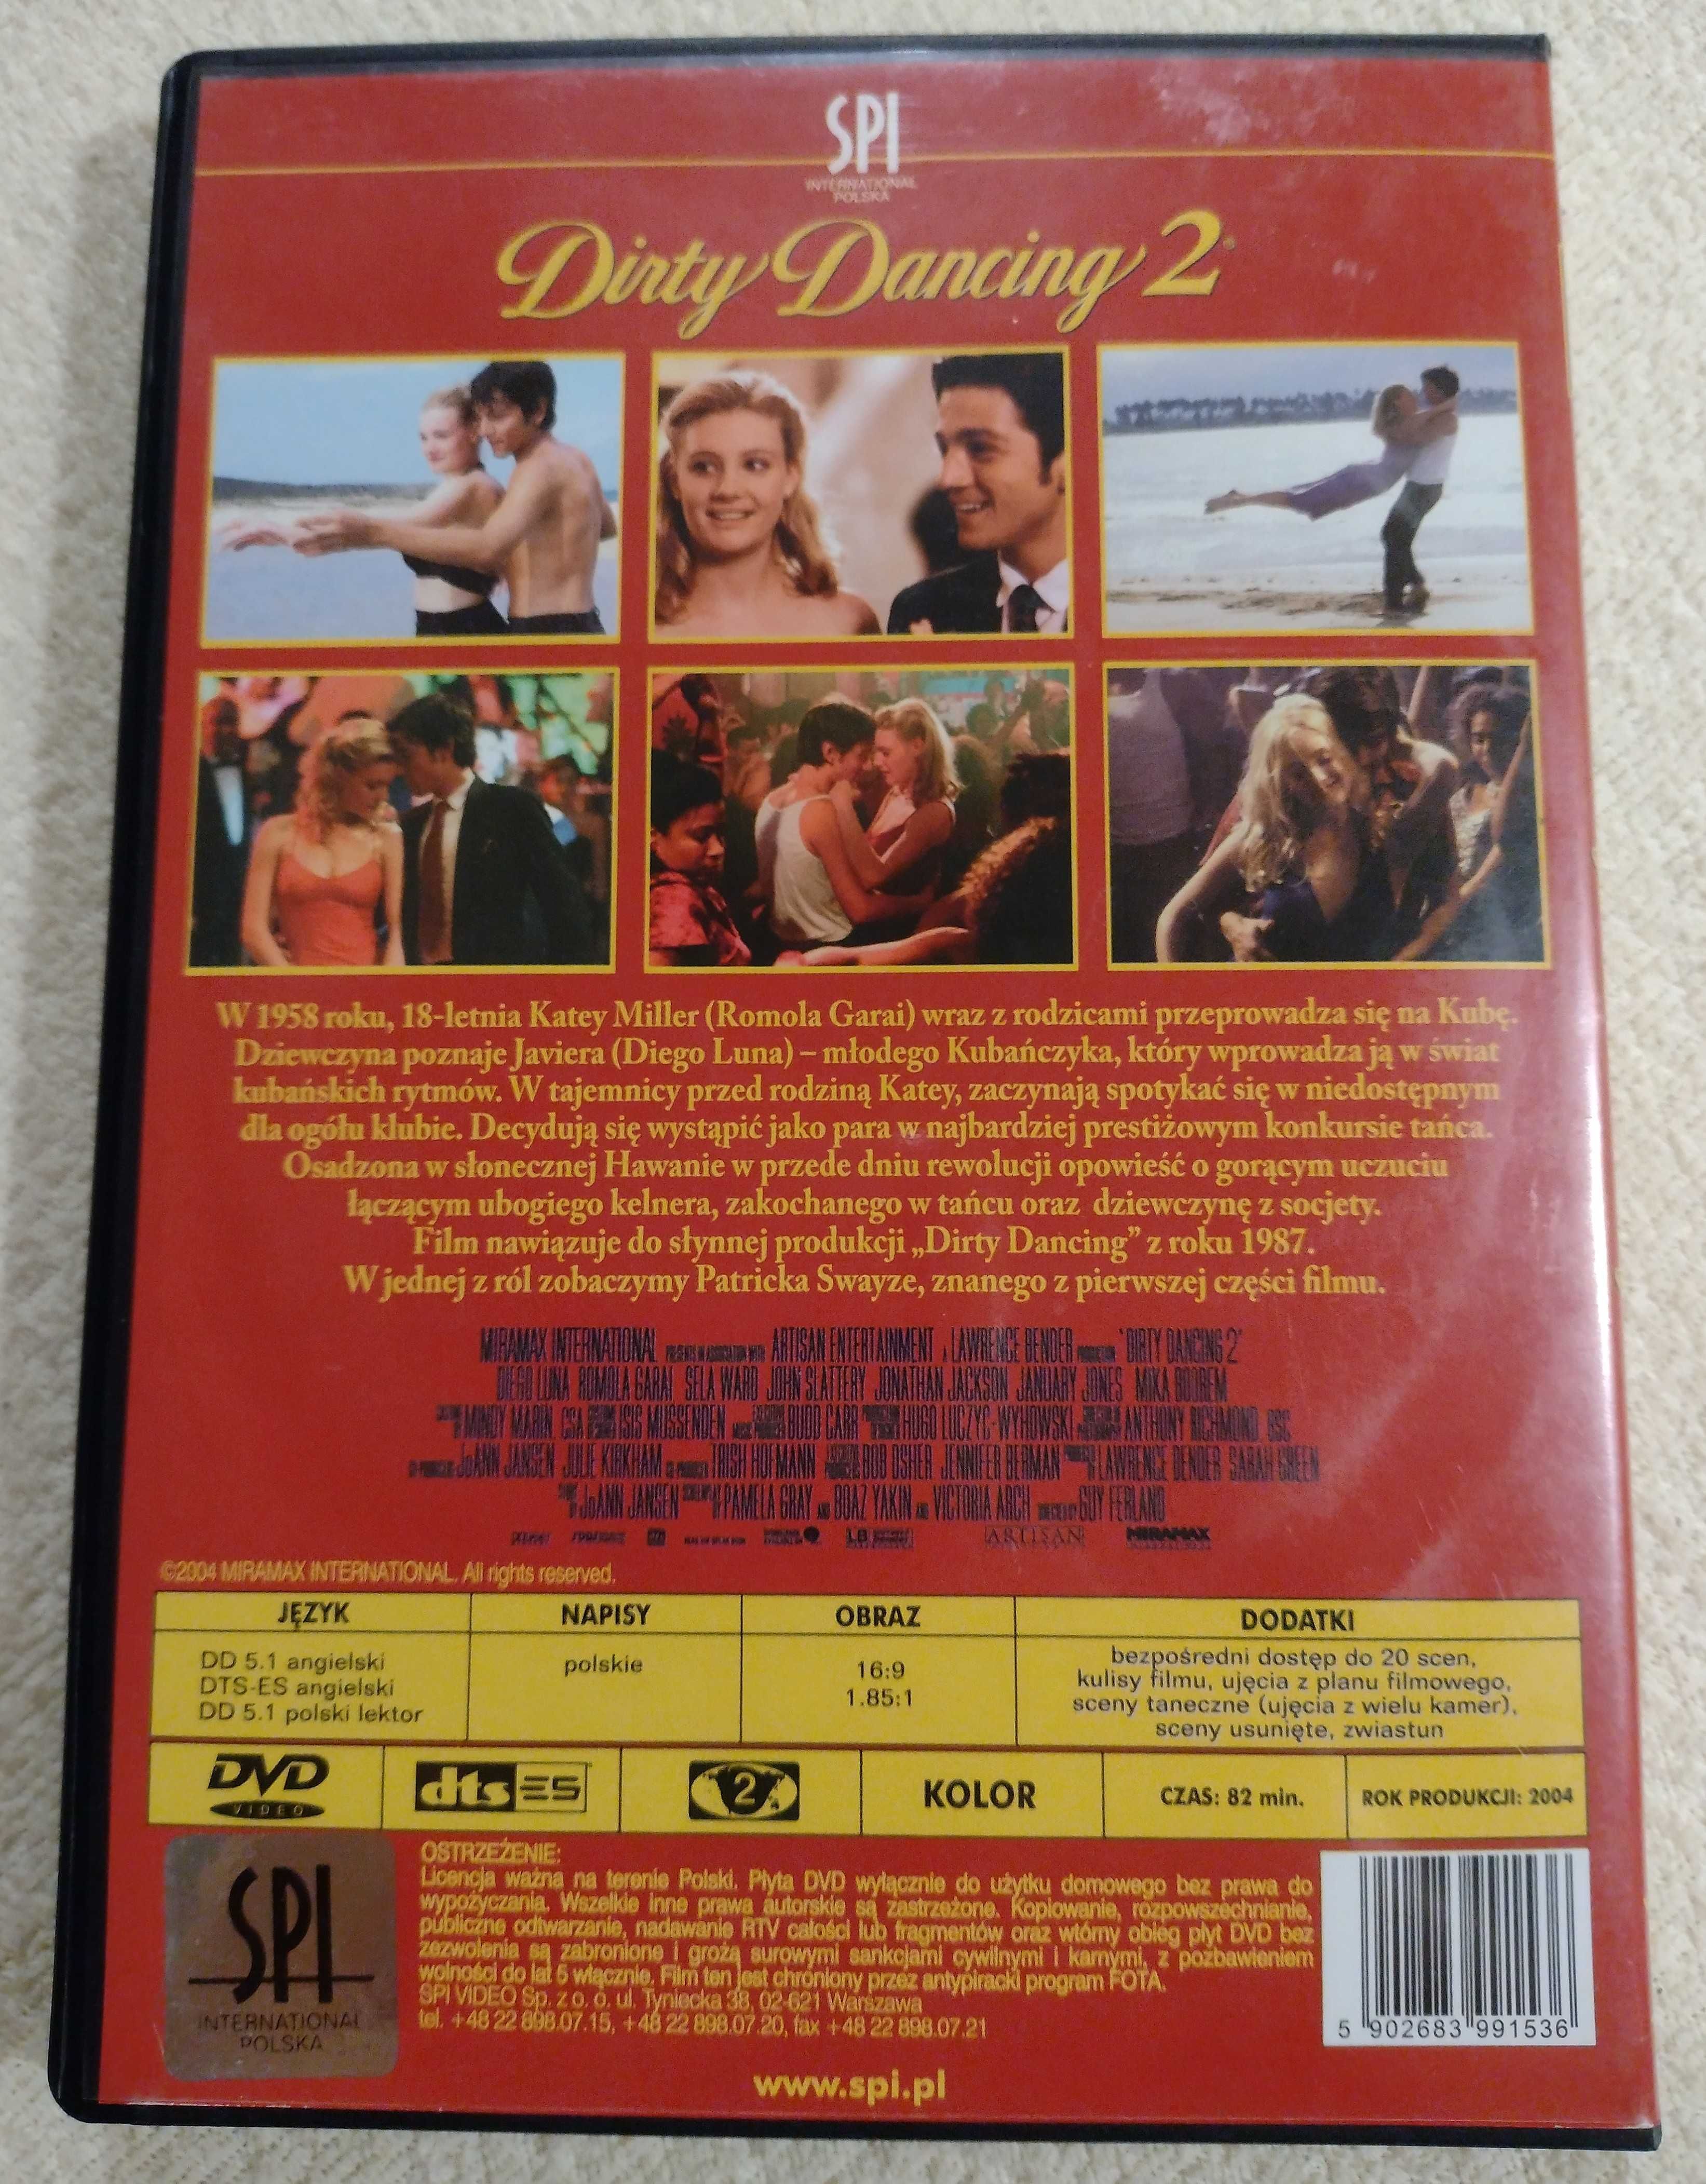 Dirty Dancing 2 DVD